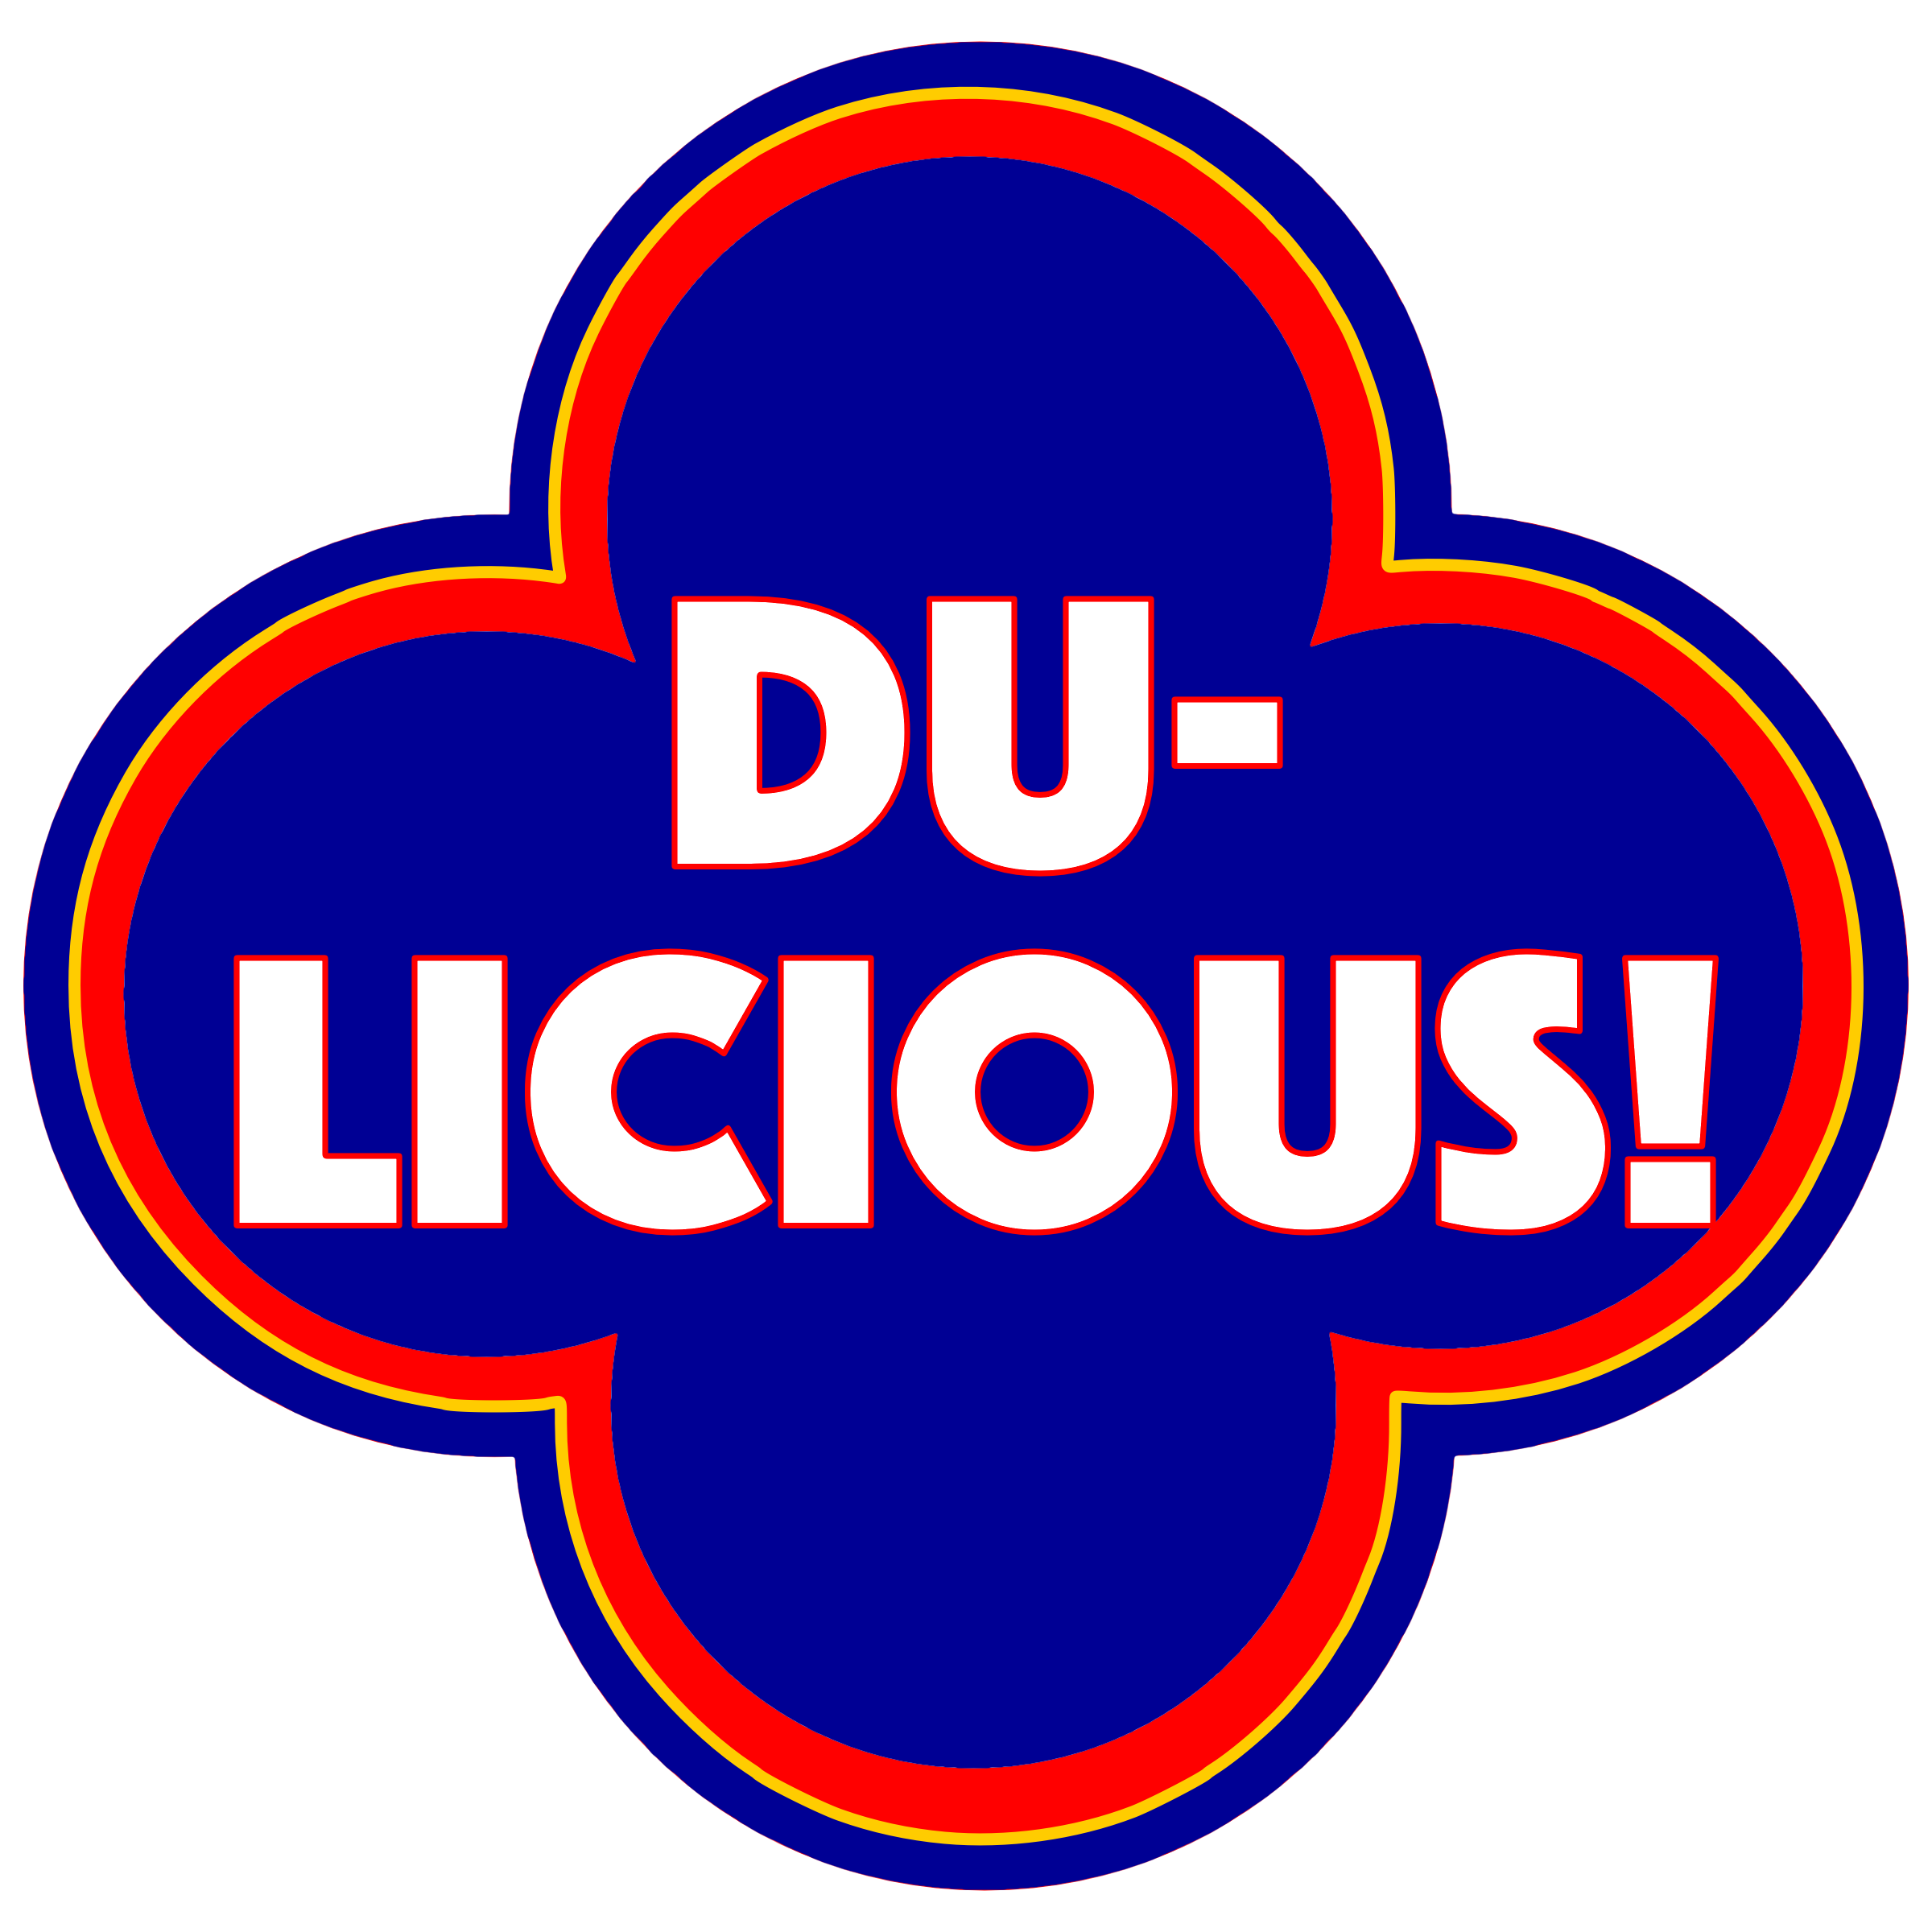 Du-licious!